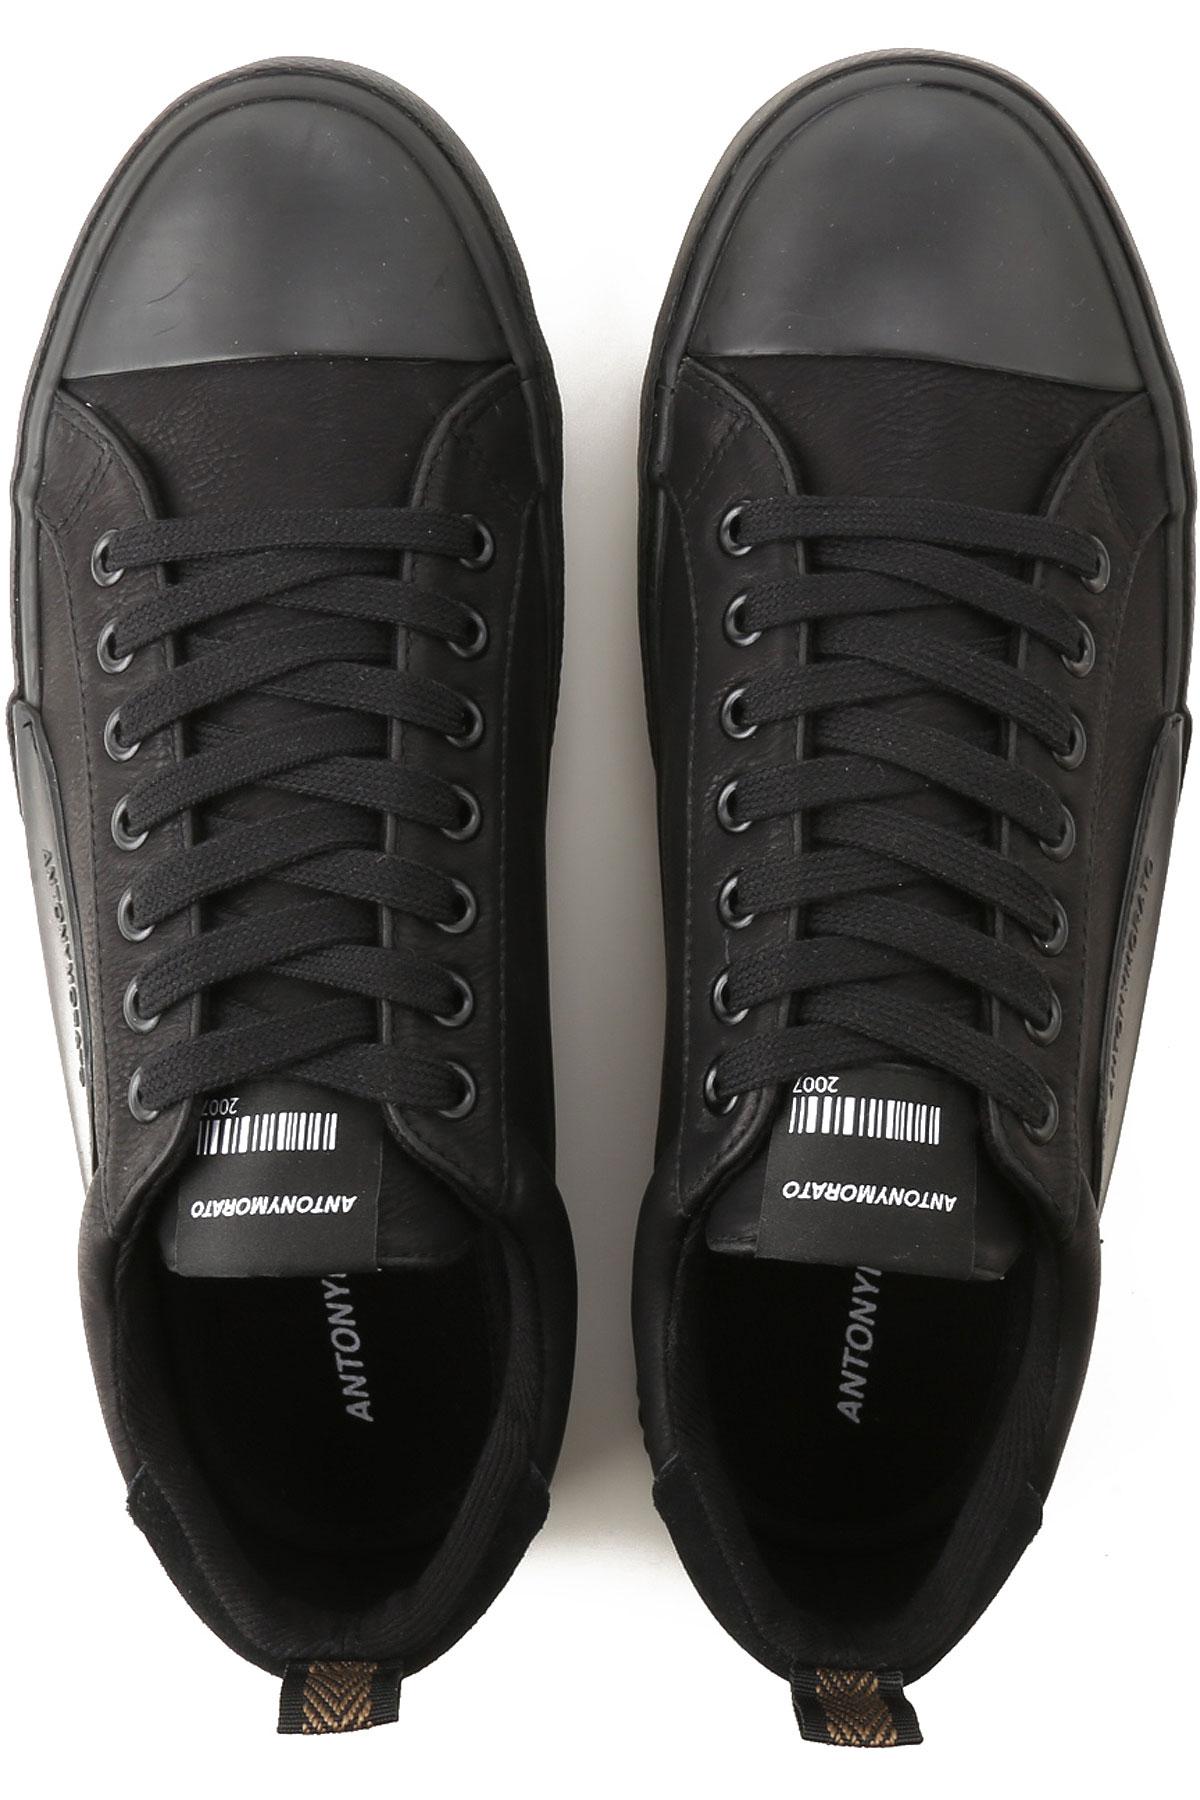 Antony Morato Sneakers For Men On Sale 